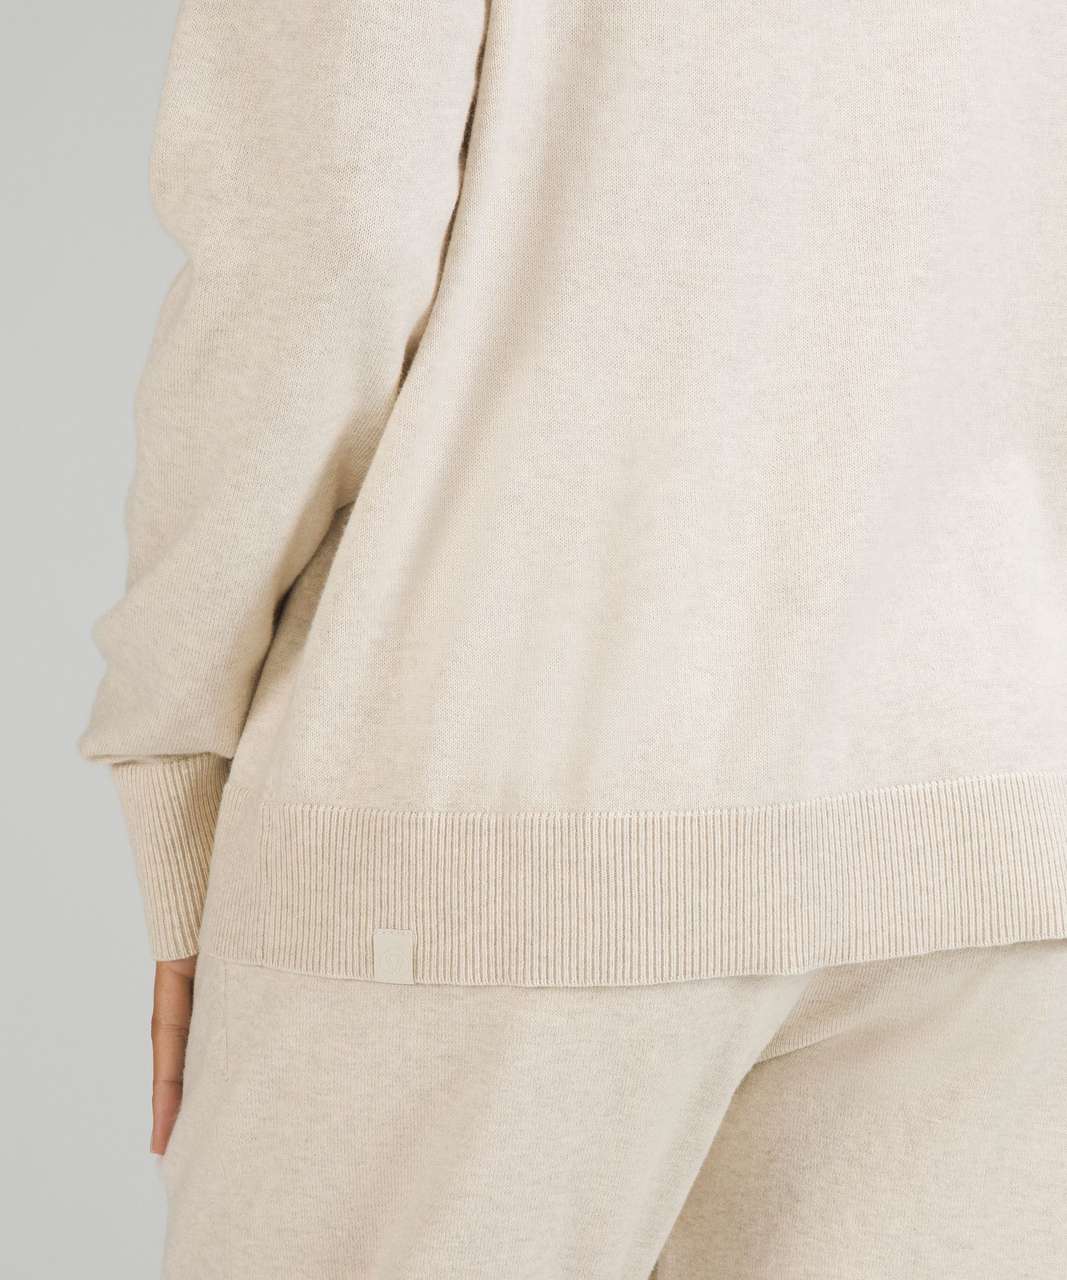 Lululemon Cotton-Cashmere Blend Crewneck Sweater - Heathered Natural Ivory